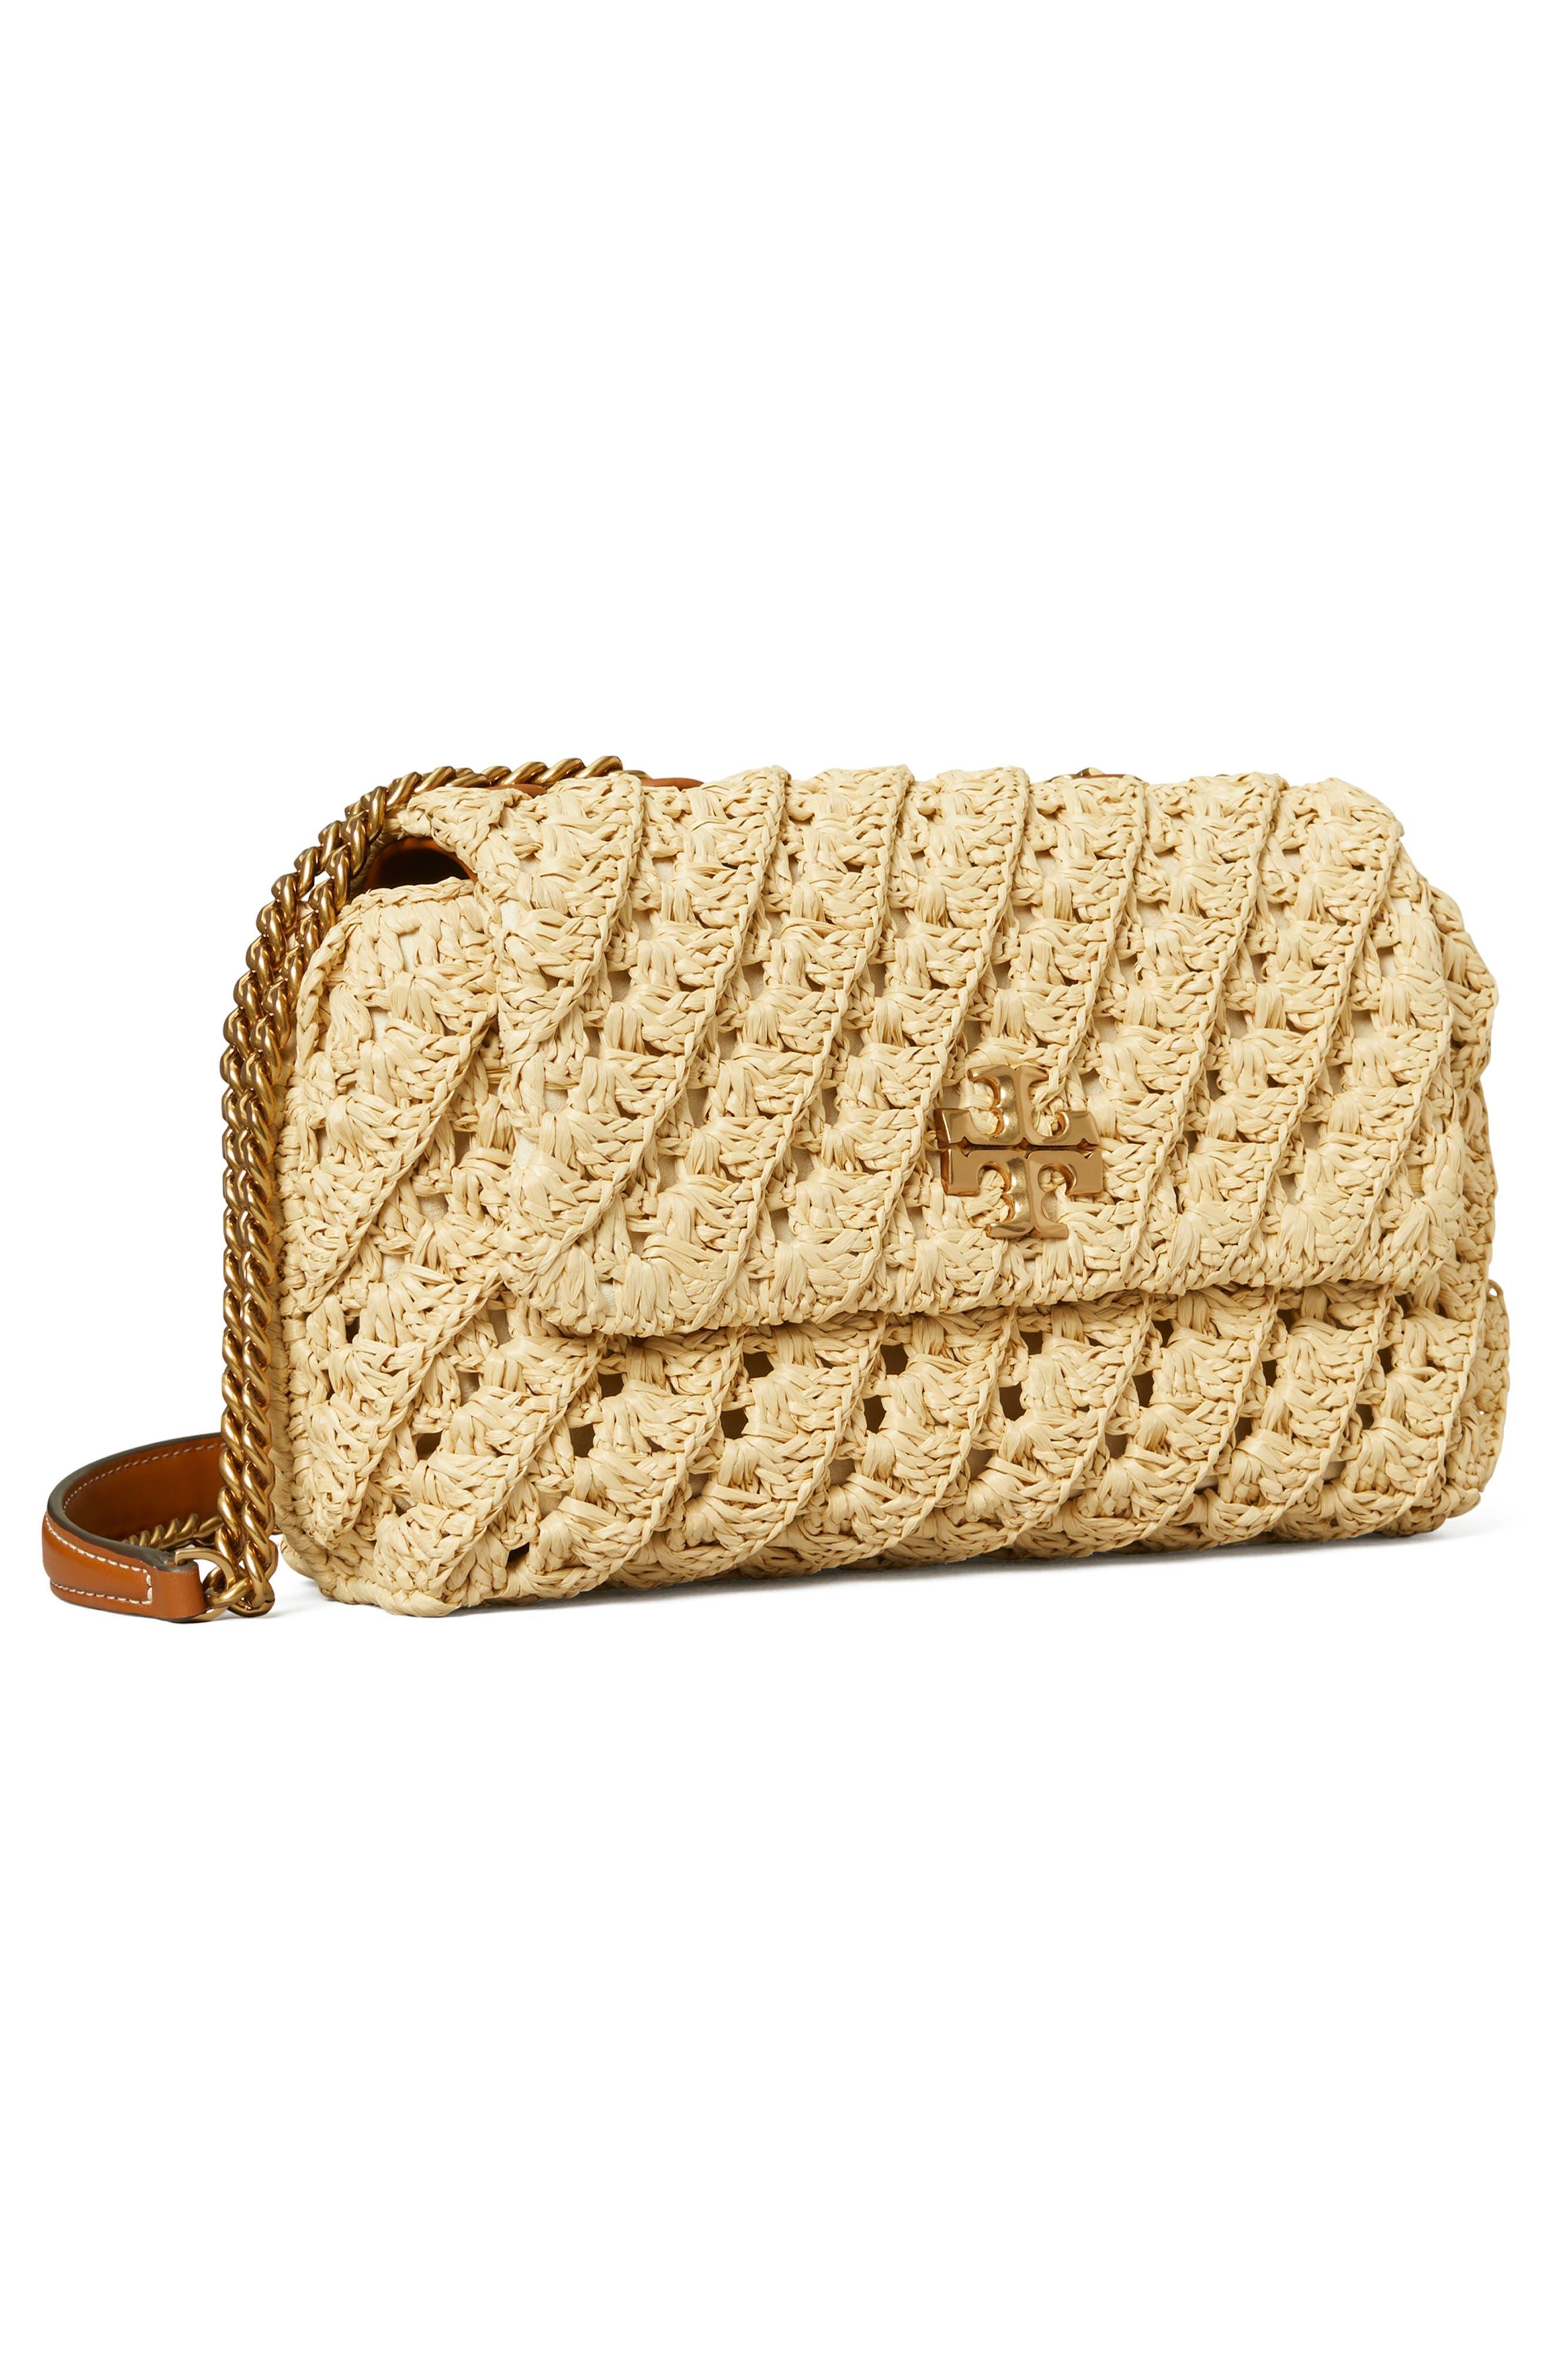 Tory Burch Small Kira Raffia Crochet Convertible Shoulder Bag in Metallic |  Lyst